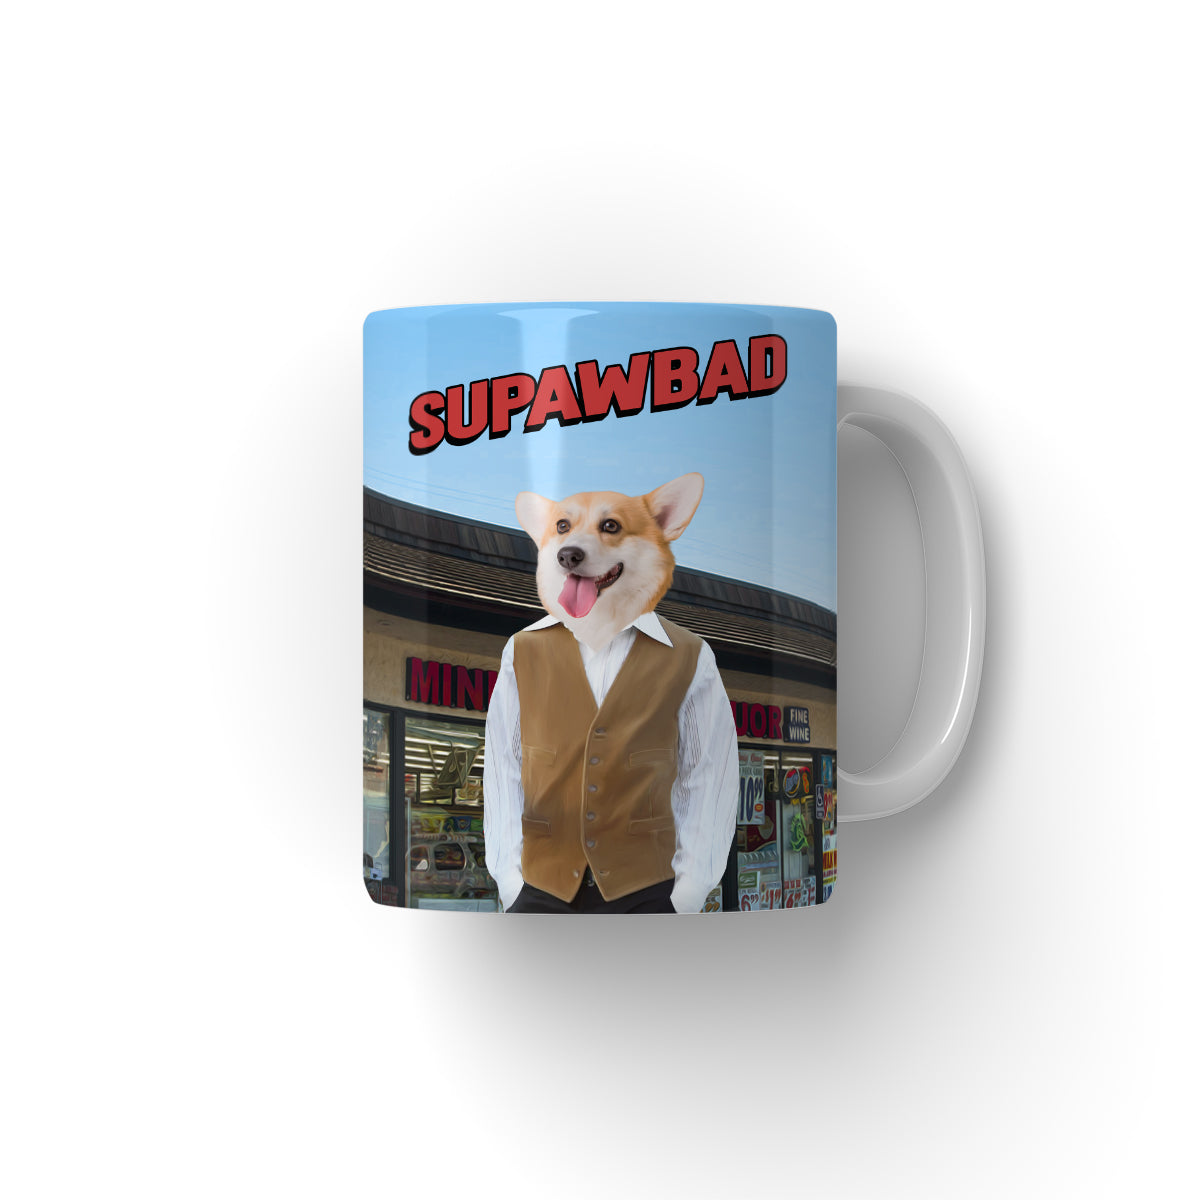 Paw & Glory, paw and glory, personalized coffee mug with cats, personalised dog mug, mug with dog picture, personalized puppy mug, mugs with dog and owner, personalized coffee mug with dogs, Pet Portraits Mug,